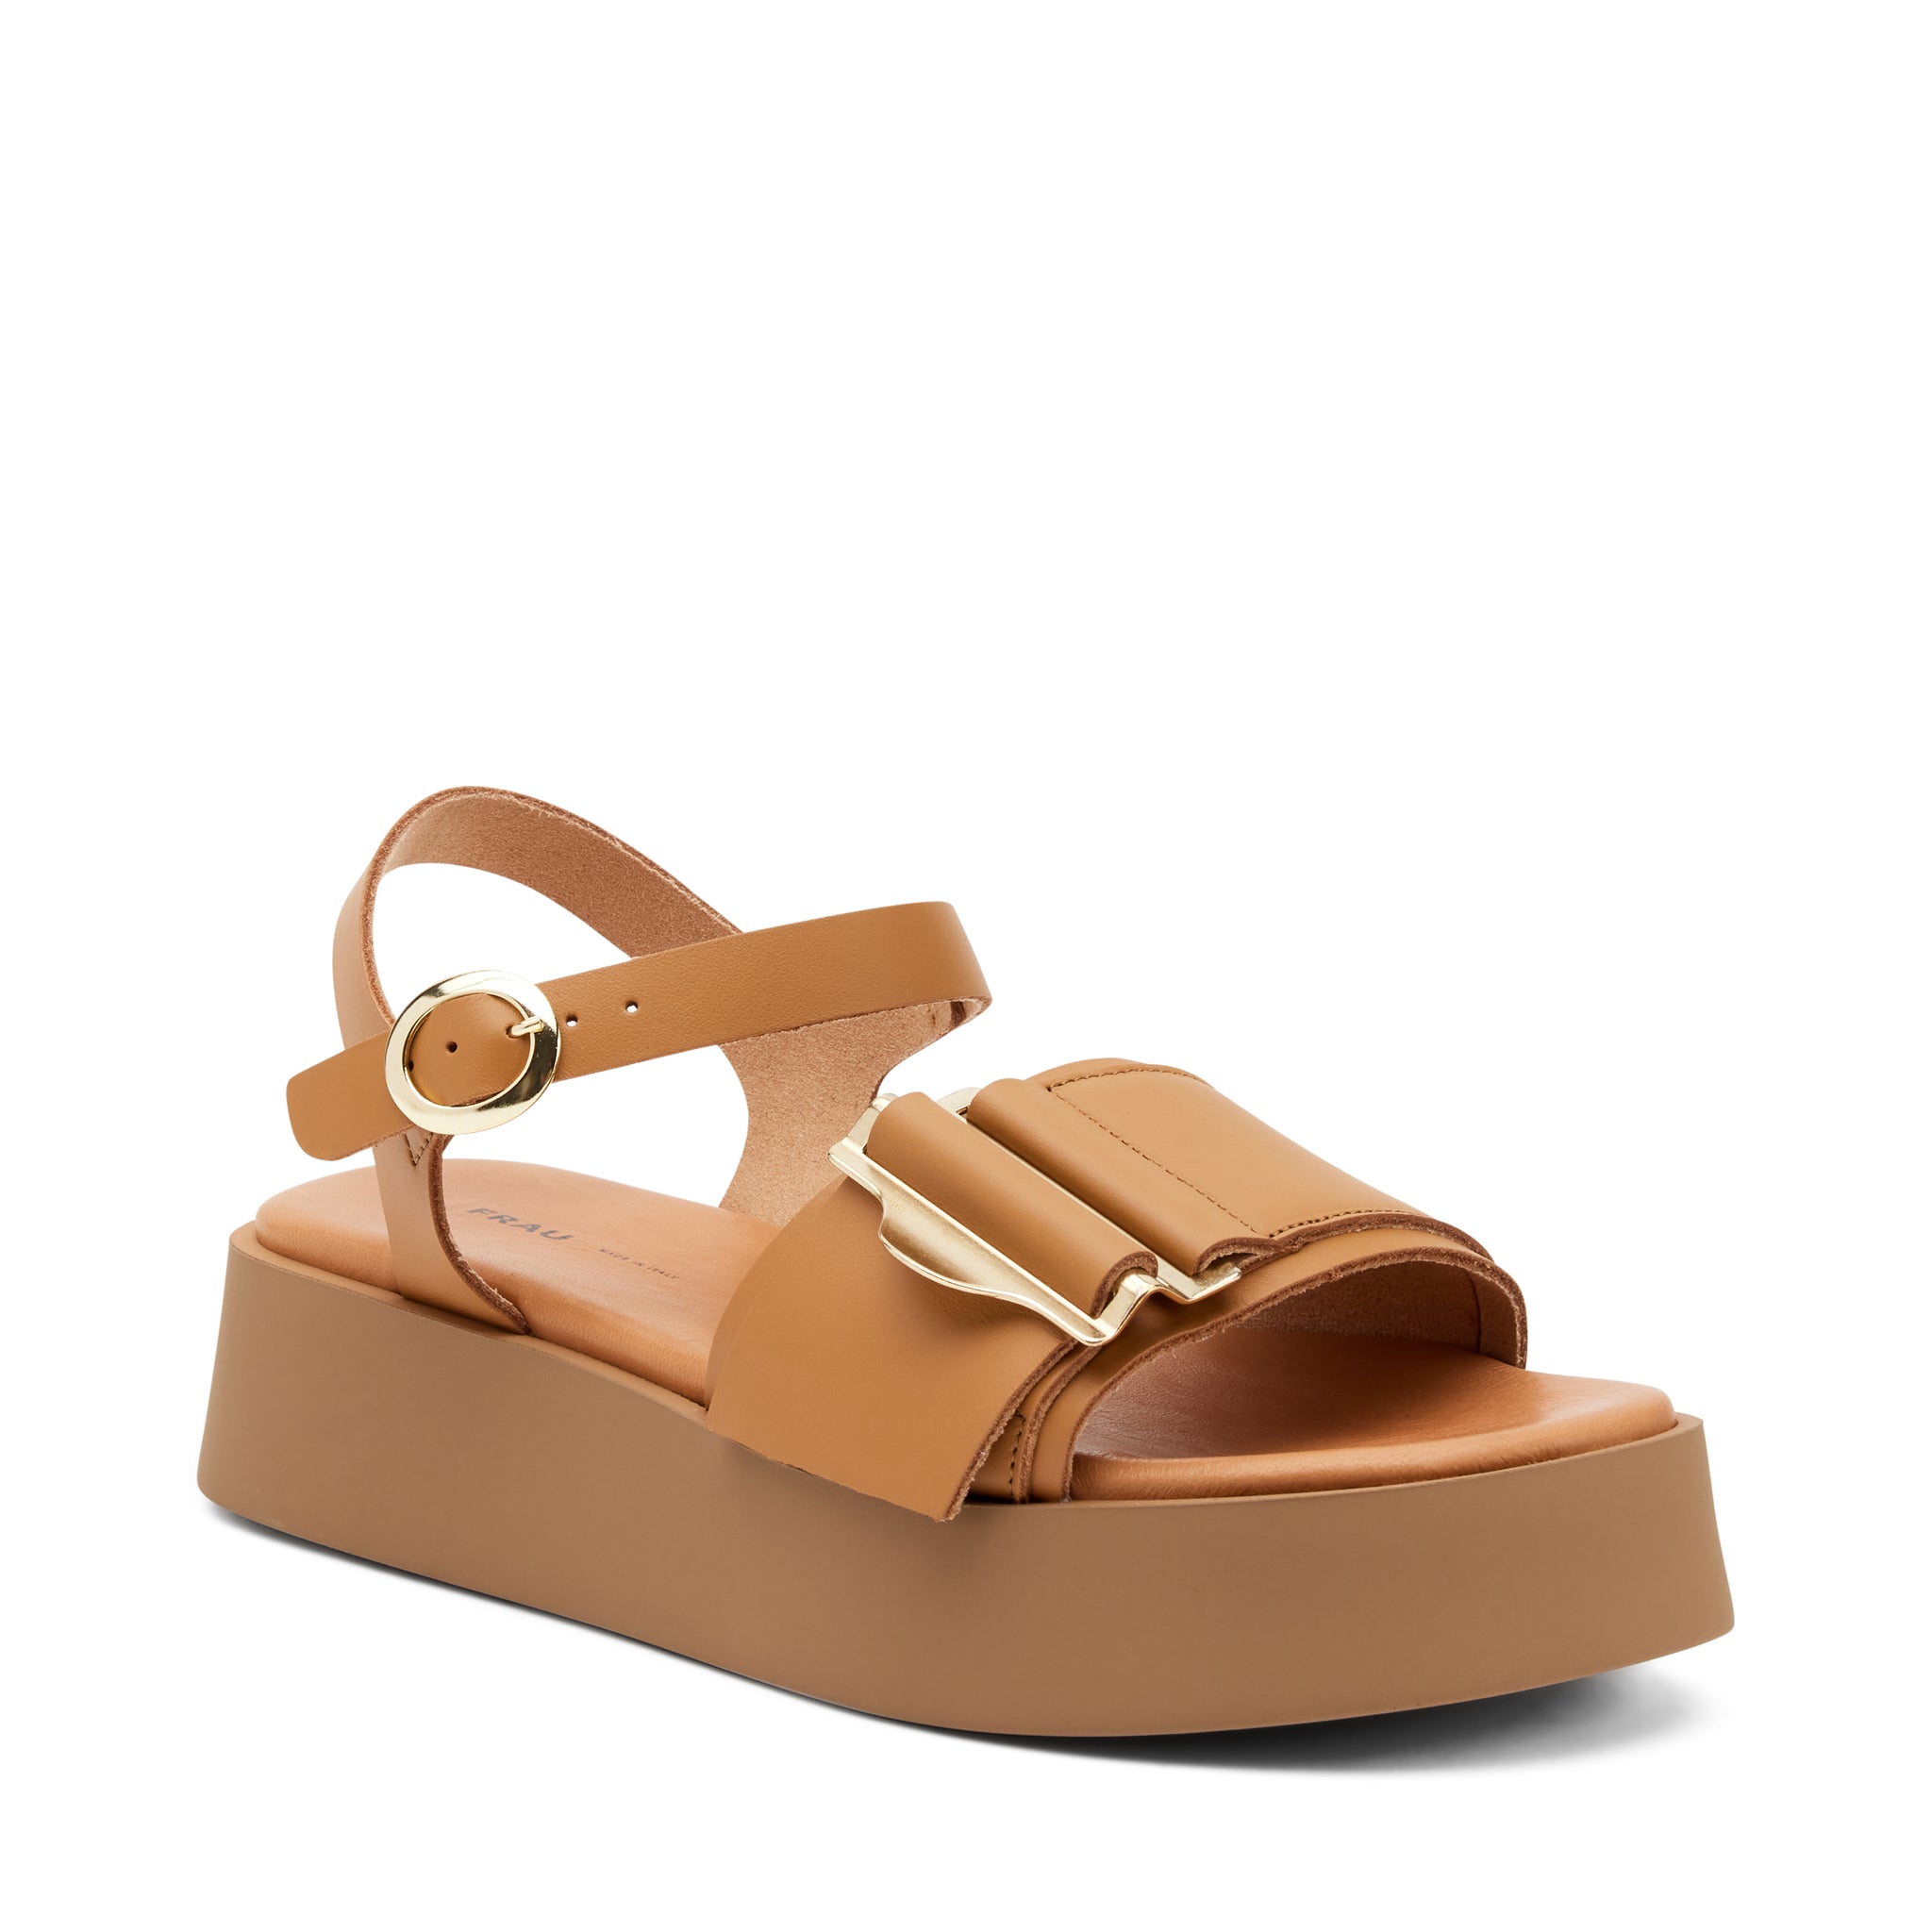 Sandalo in Pelle Frau / Cuoio - Ideal Moda